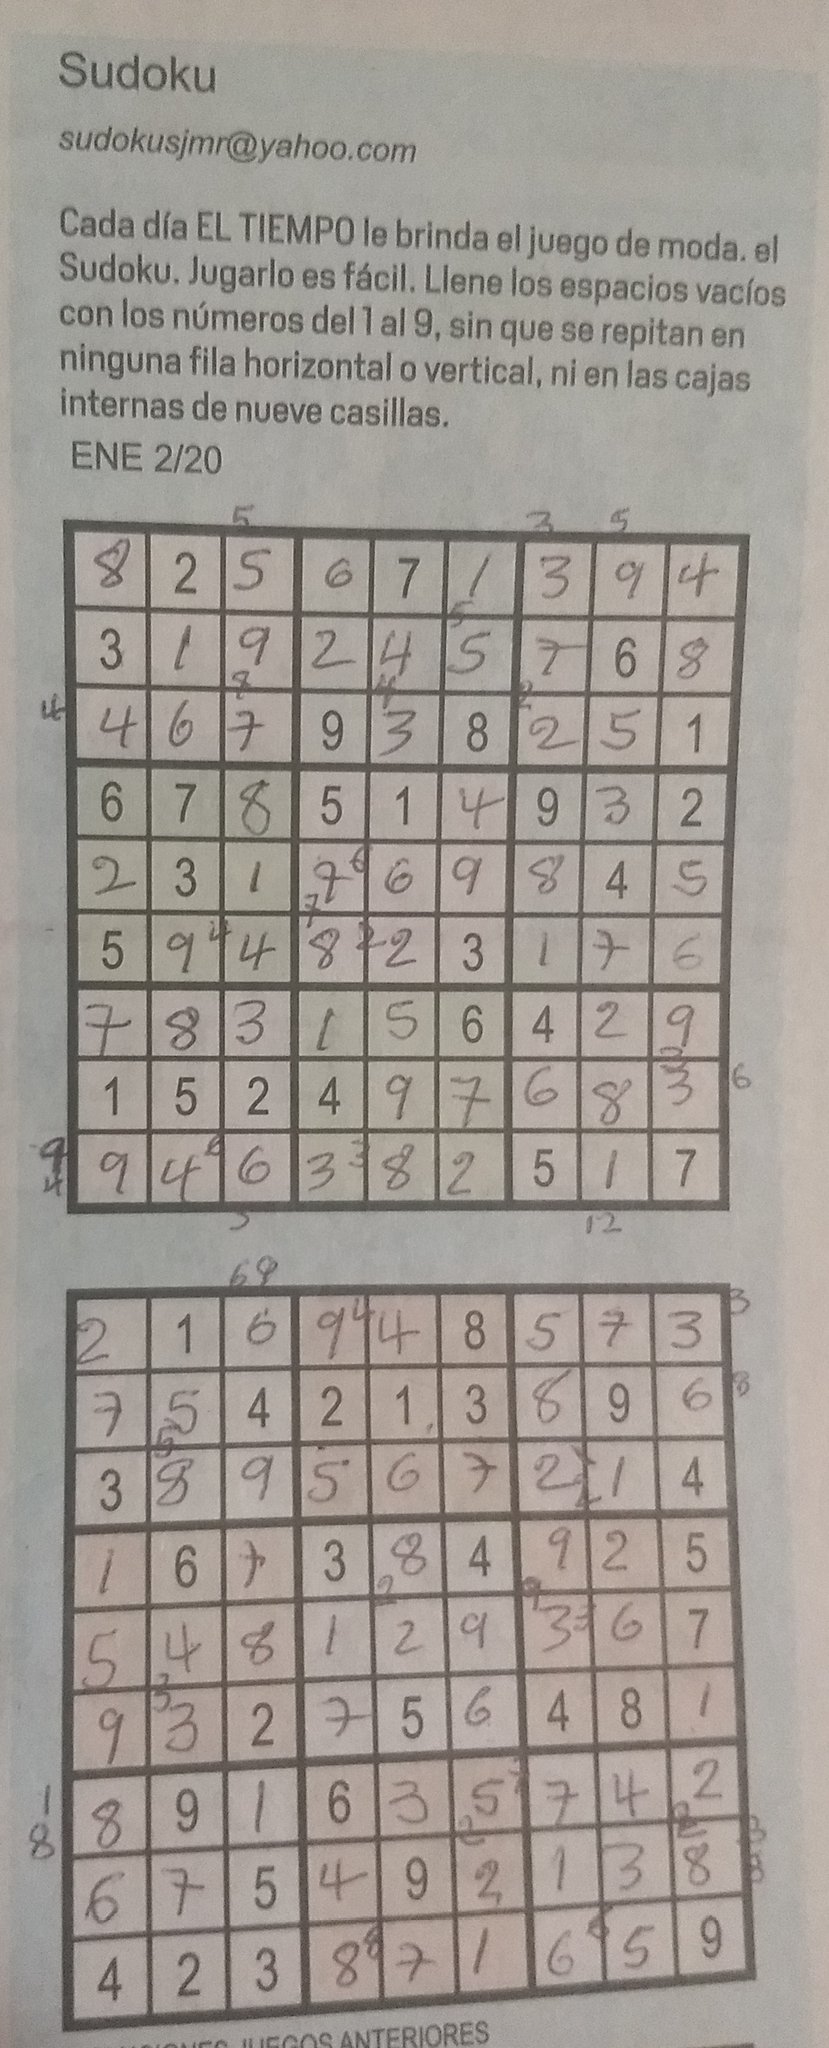 mulkalimat on Twitter: "Soluciones Sudoku Tiempo @ELTIEMPO #sudoku 2 de Enero de 2020 https://t.co/s0lamJNJzt" / Twitter